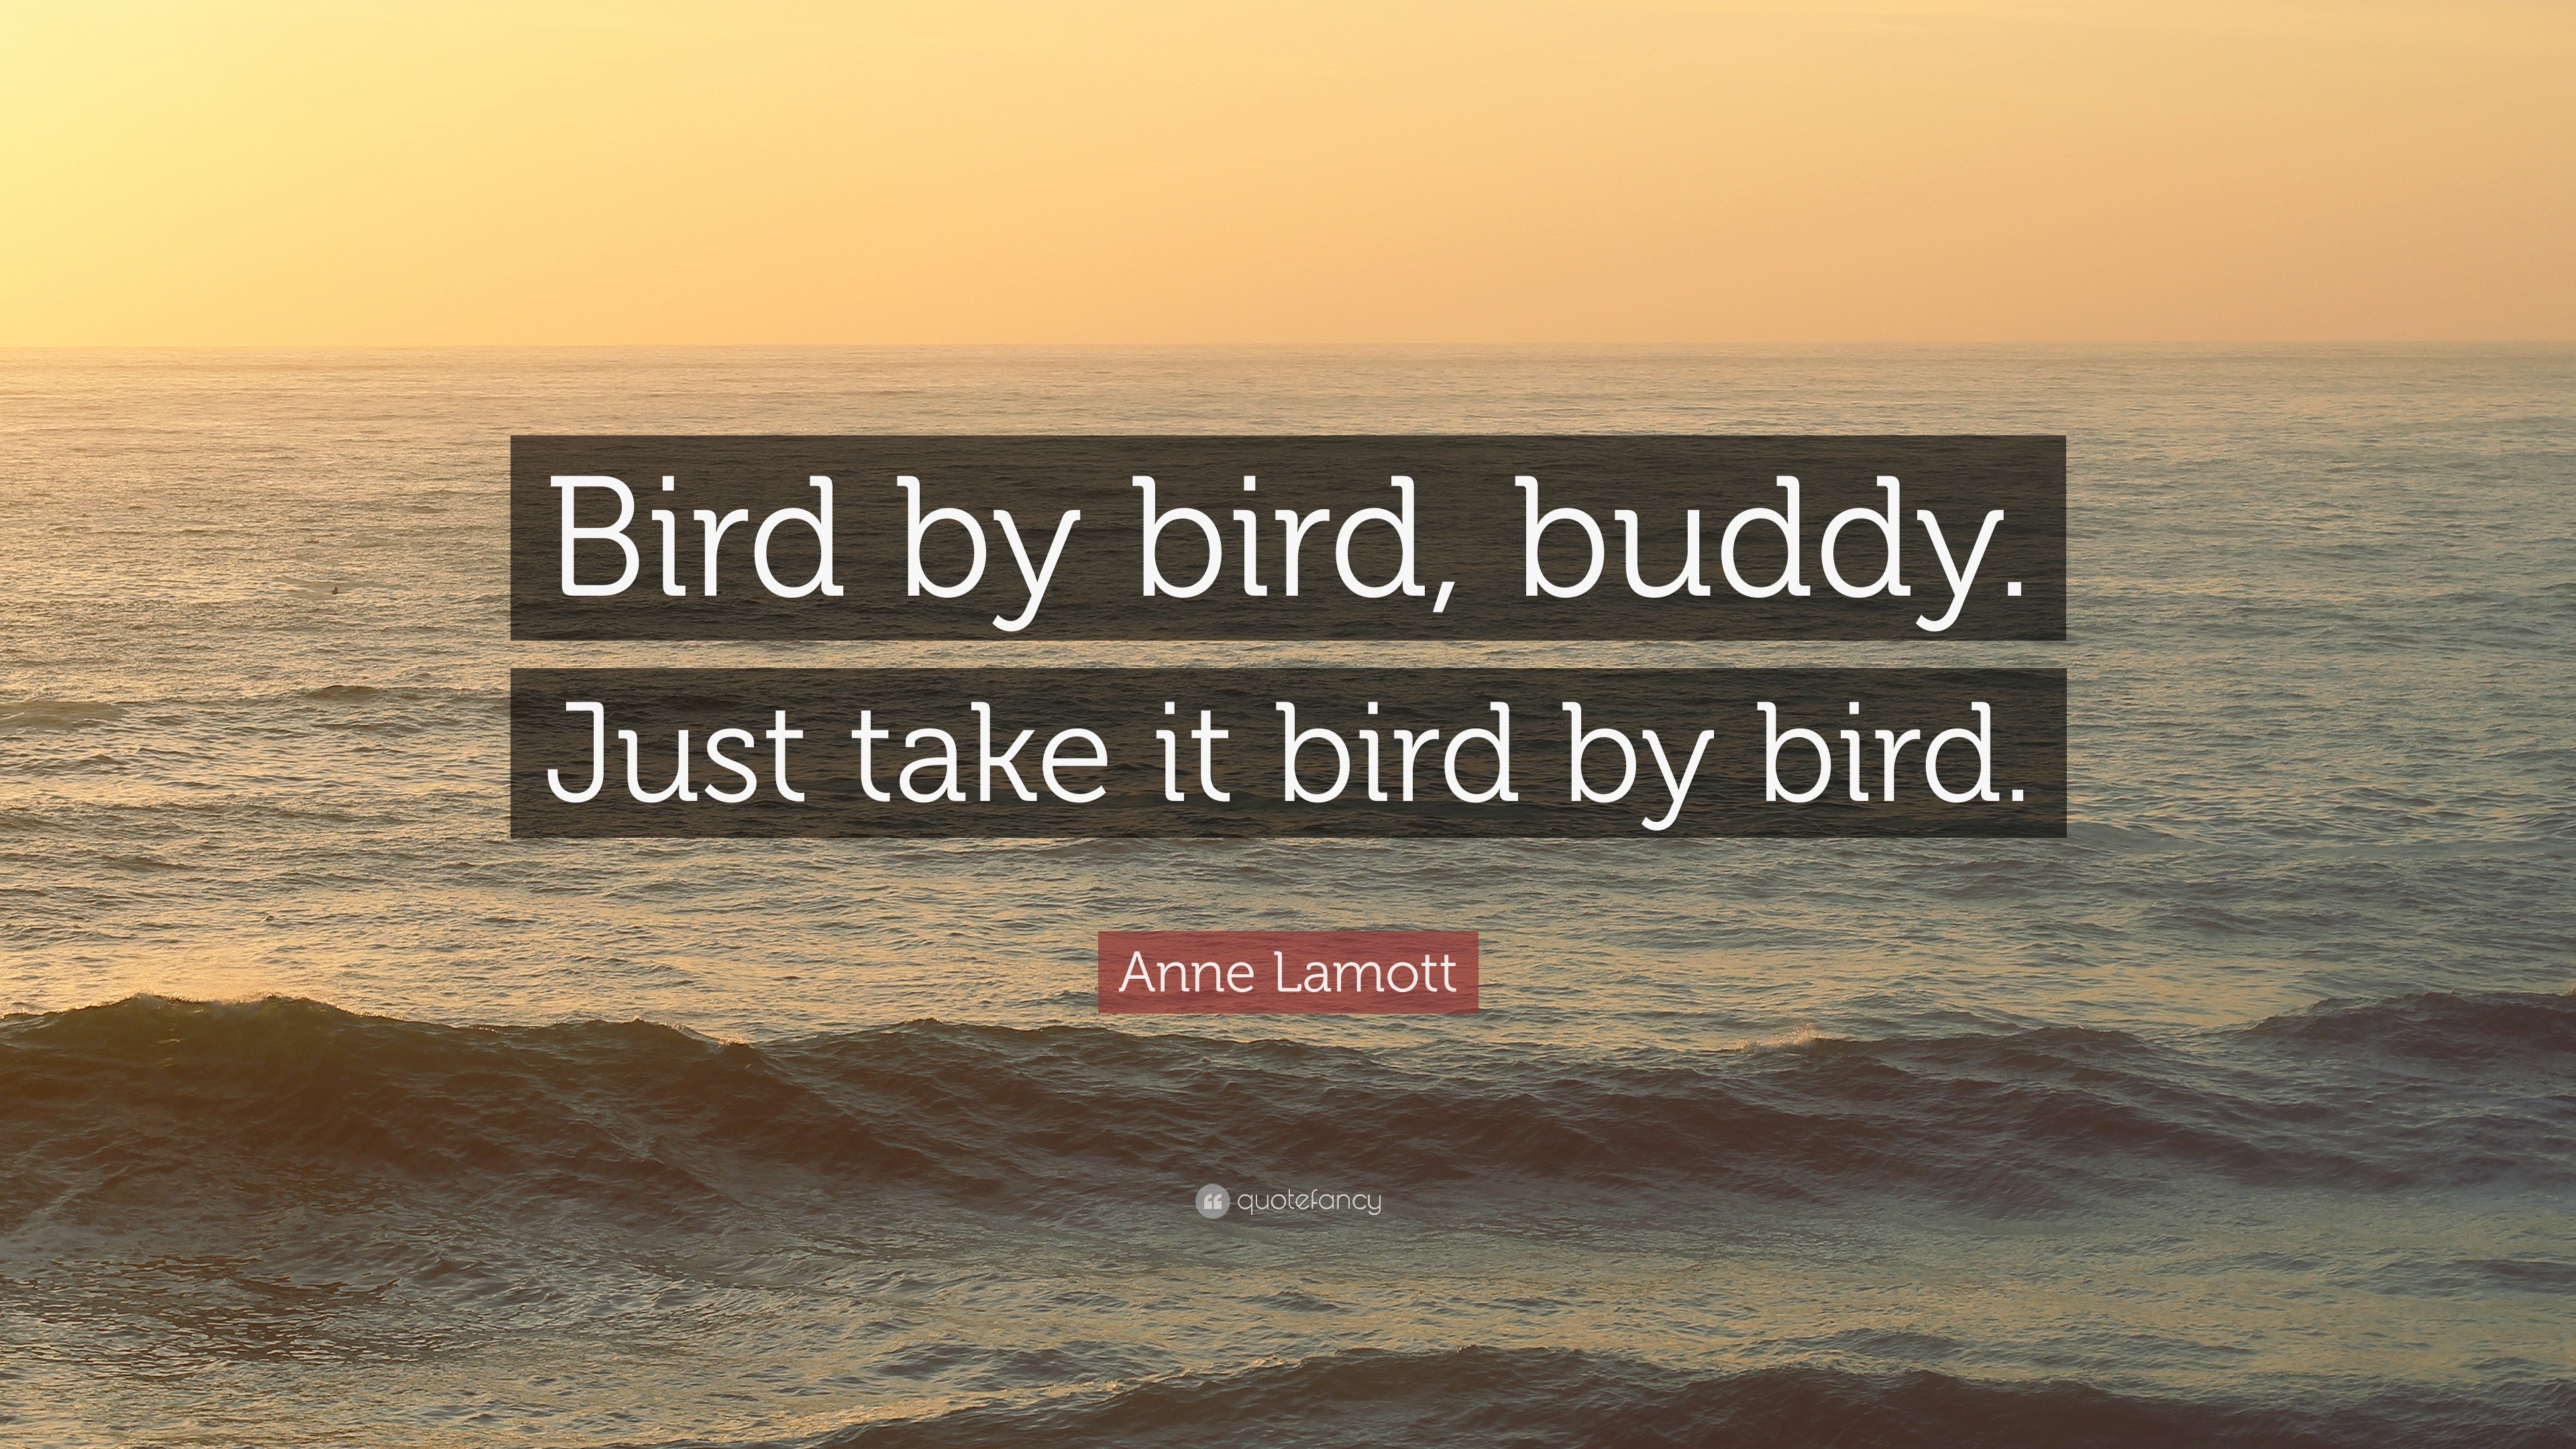 anne lamott from bird by bird